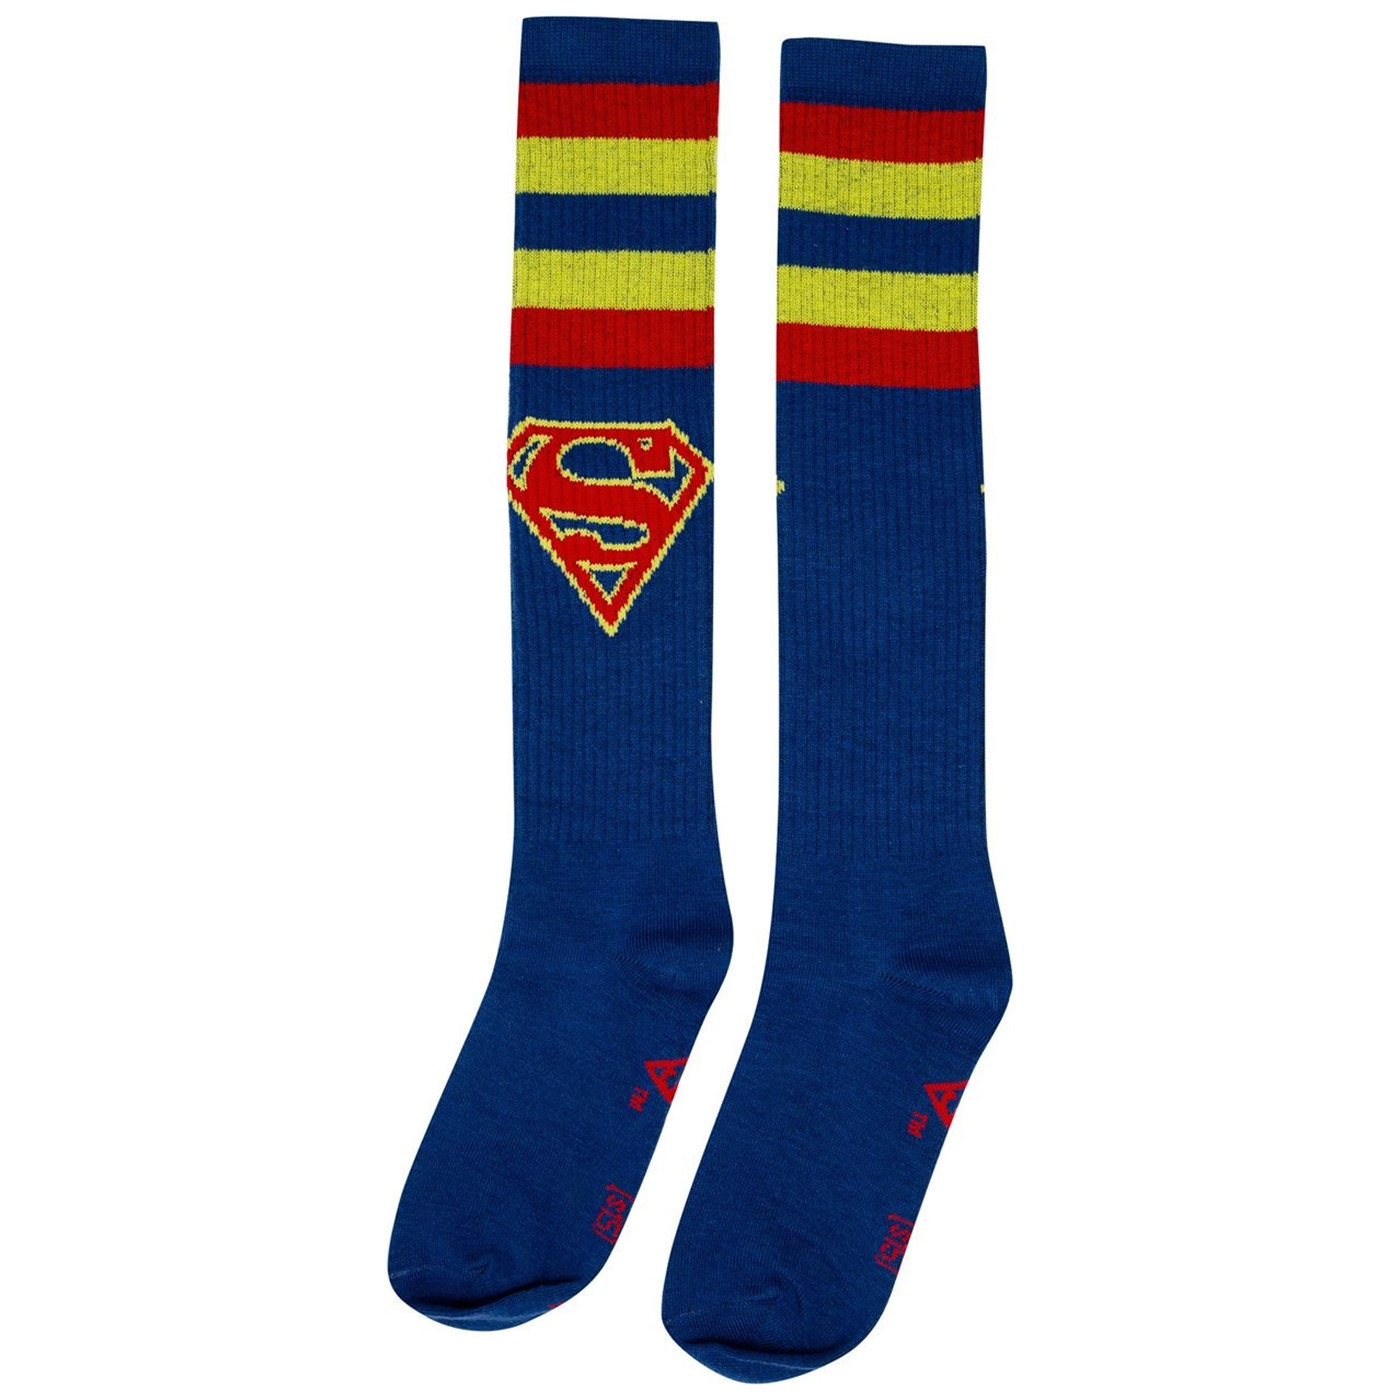 Supergirl Knee High Socks